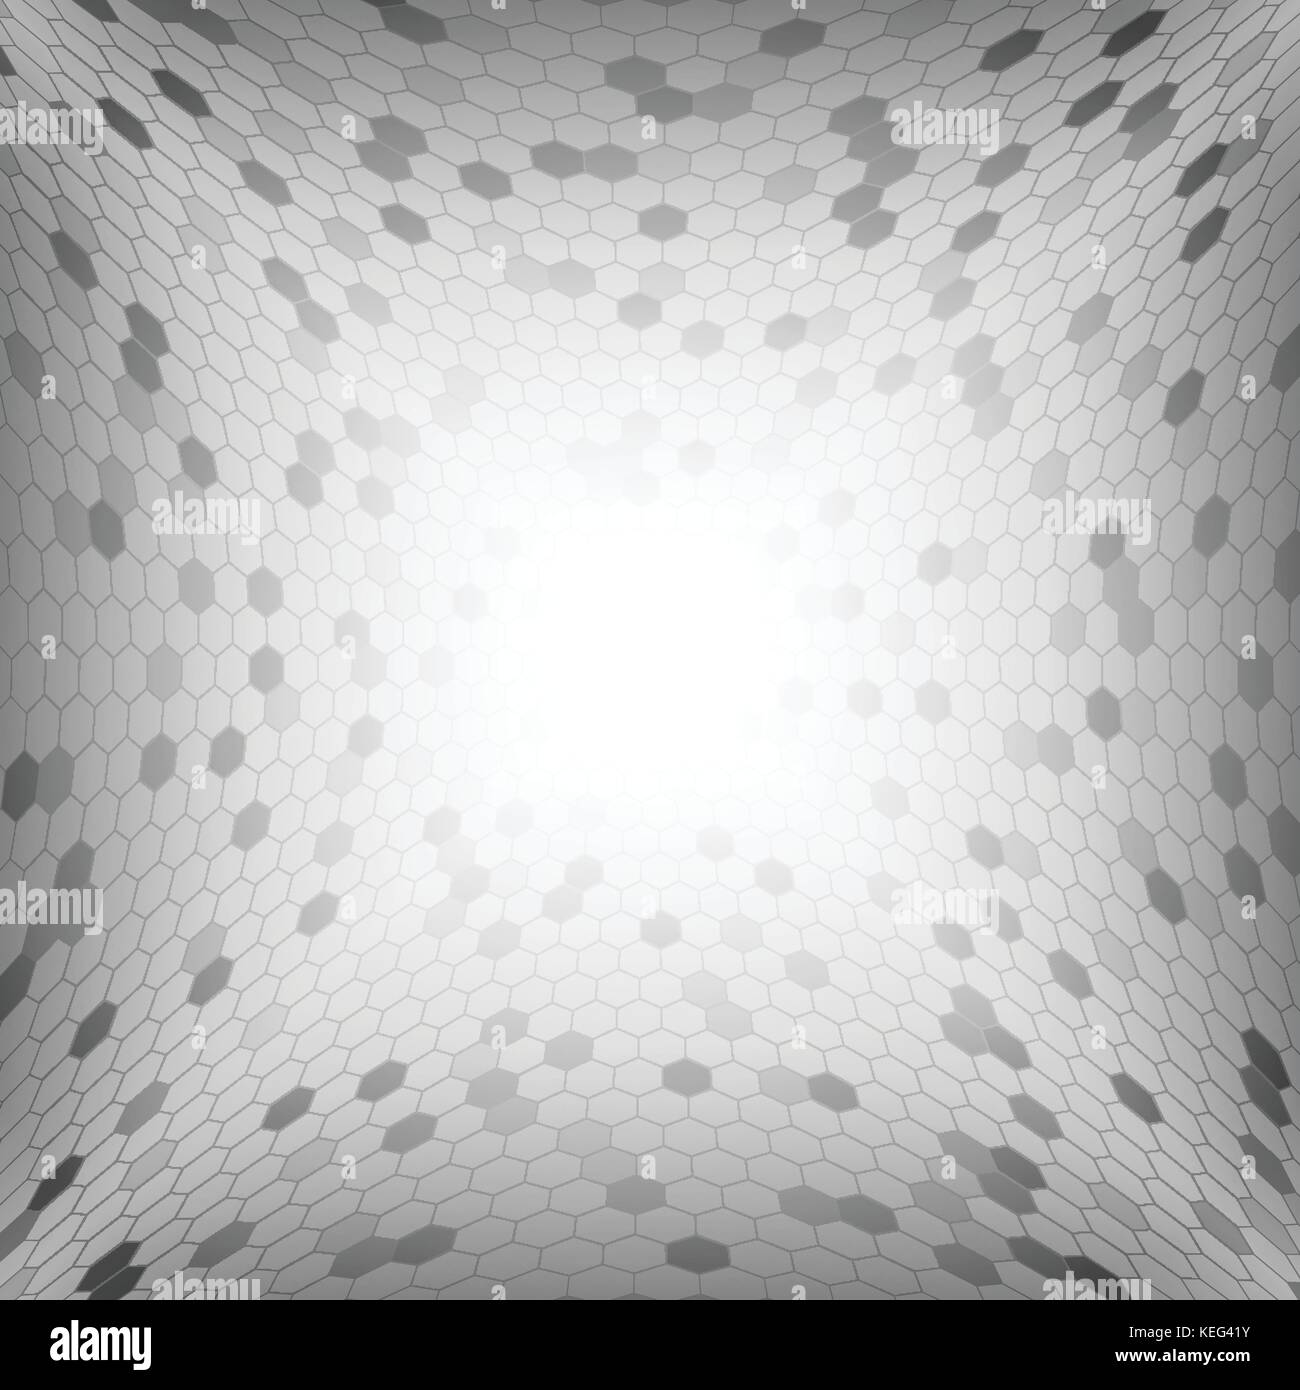 Grau hexagon Muster abstrakt hintergrund Konzept Stock Vektor